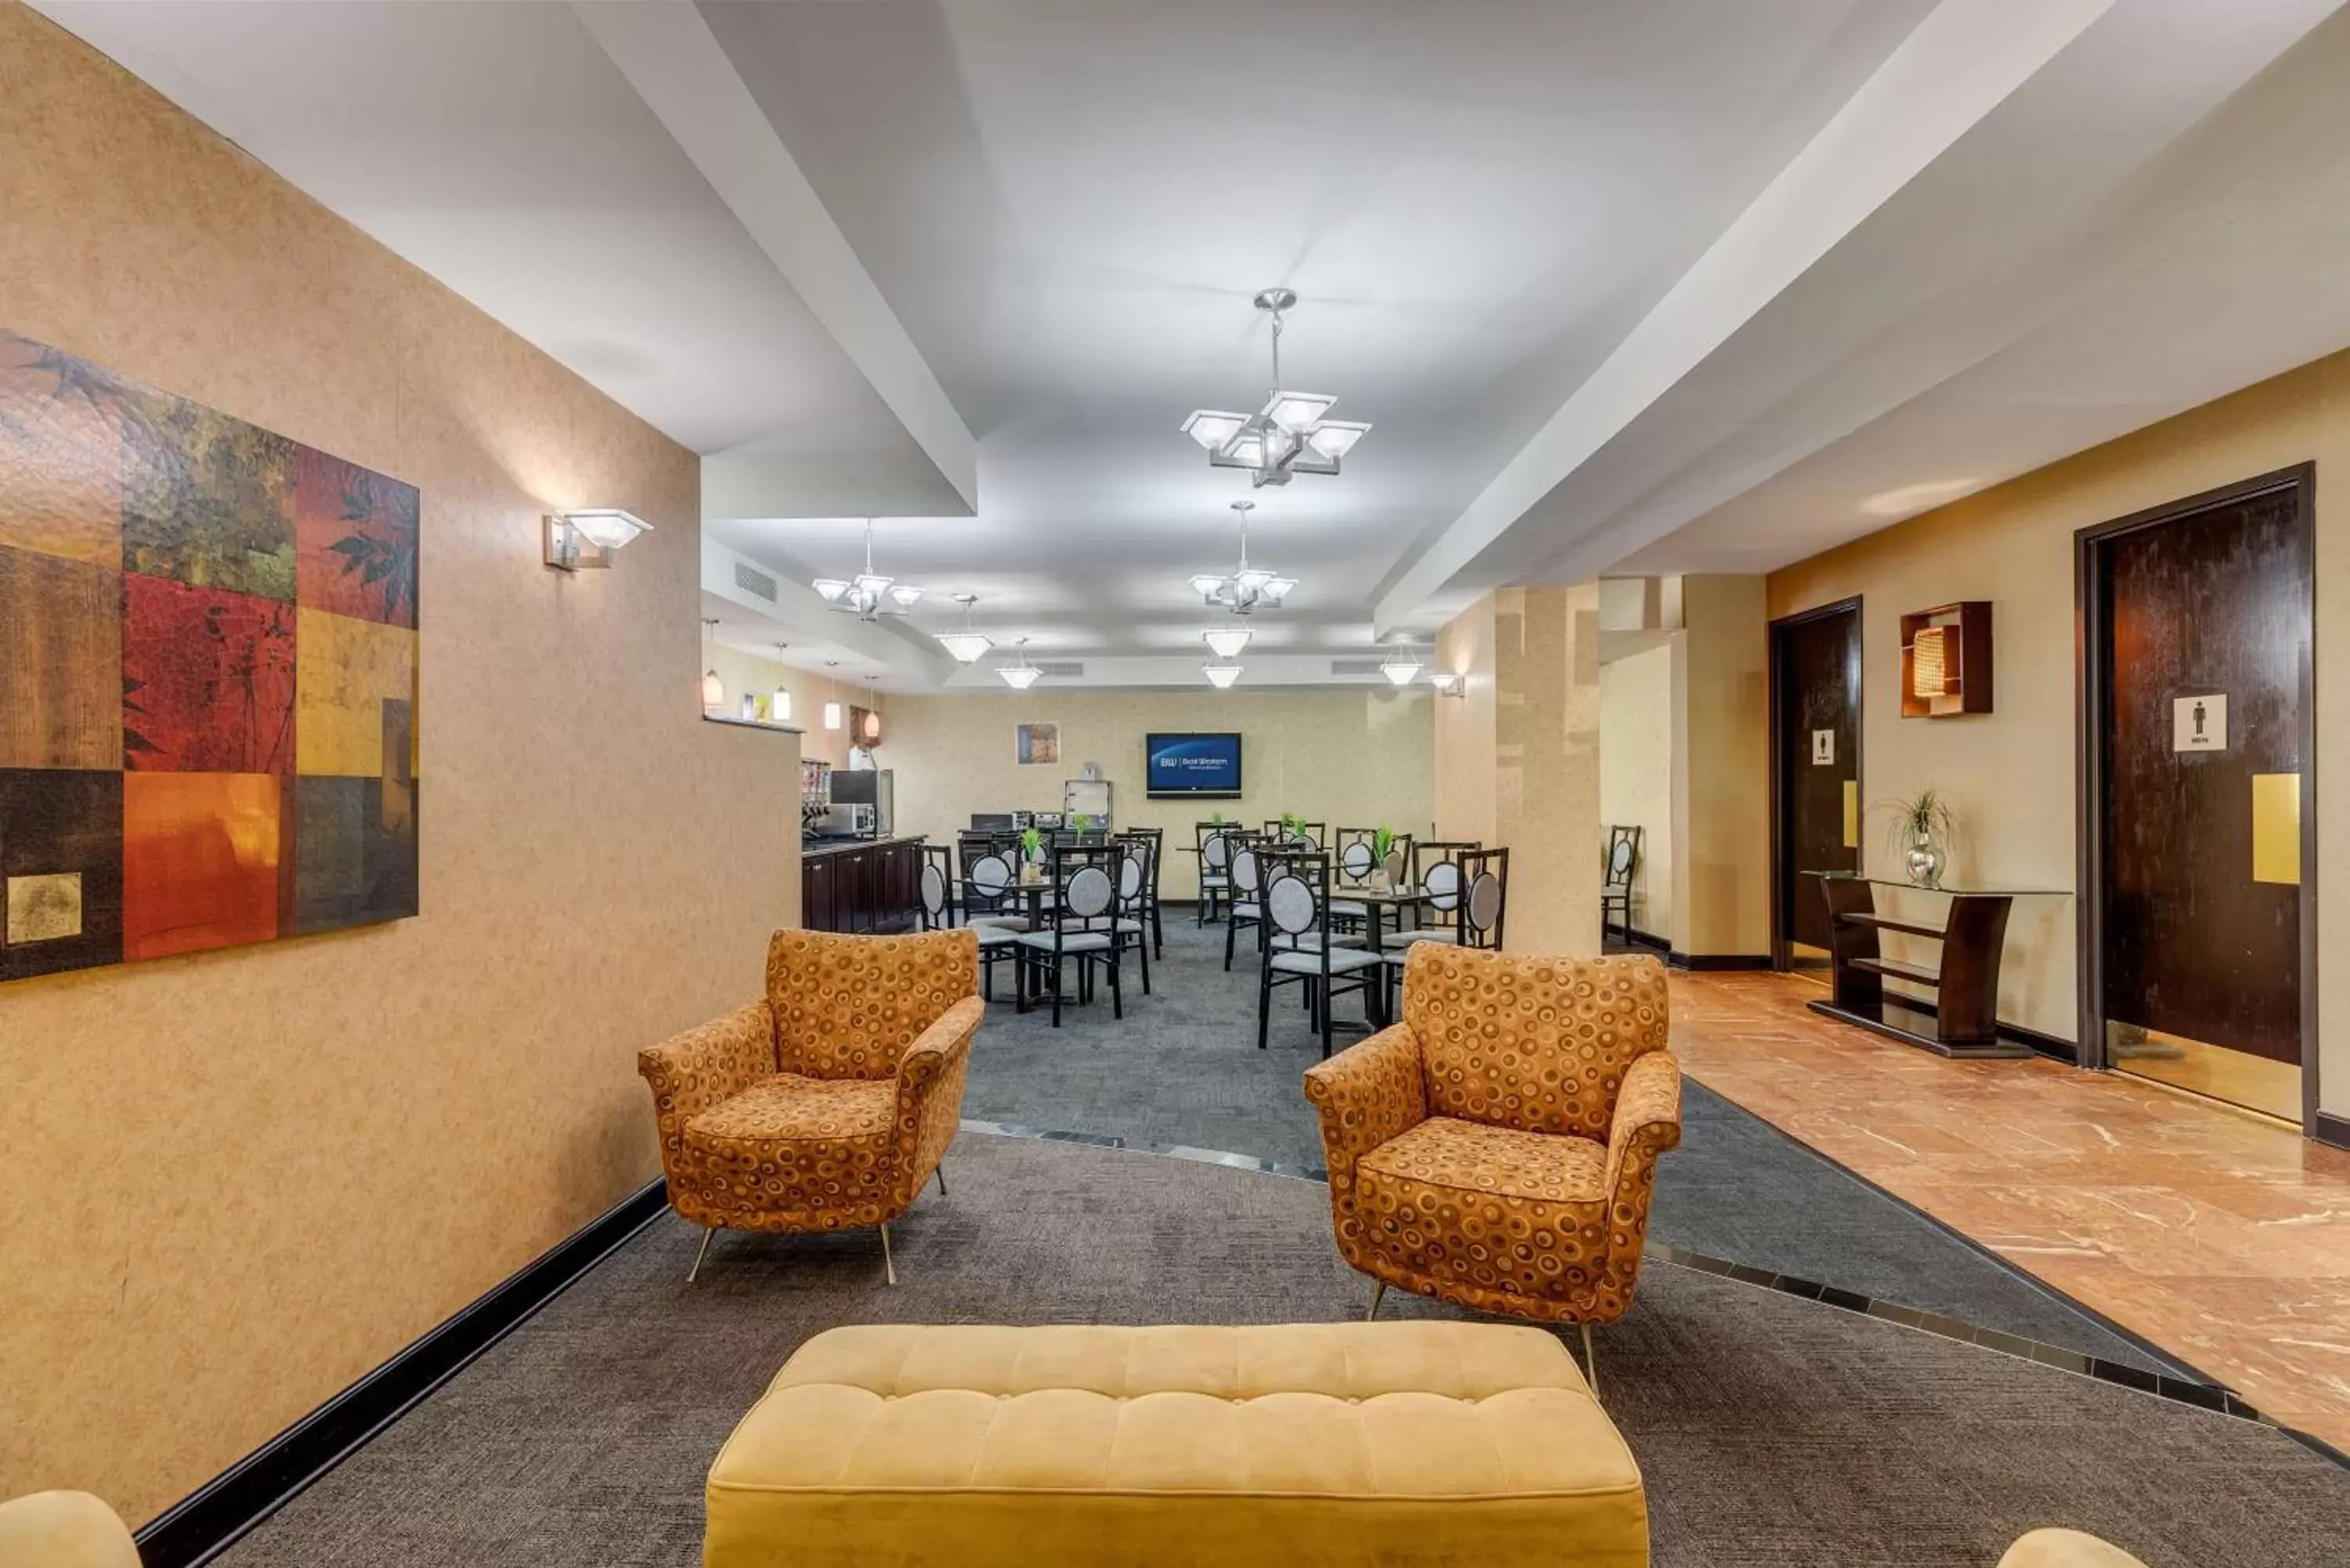 Lobby or reception in Best Western Plus Charlotte Matthews Hotel